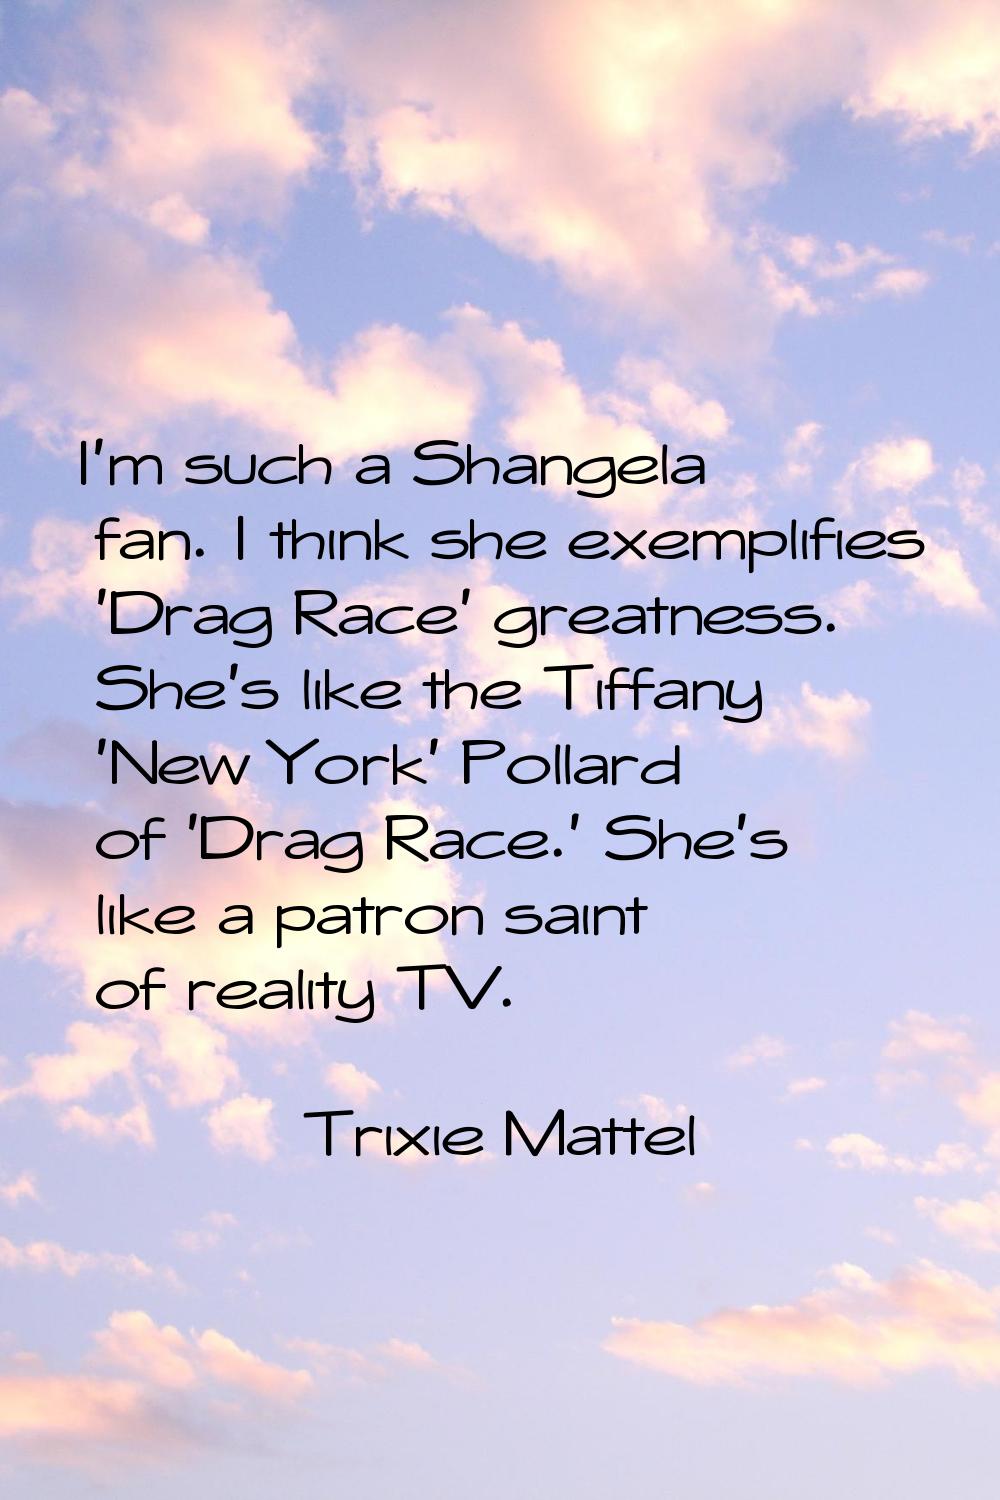 I'm such a Shangela fan. I think she exemplifies 'Drag Race' greatness. She's like the Tiffany 'New